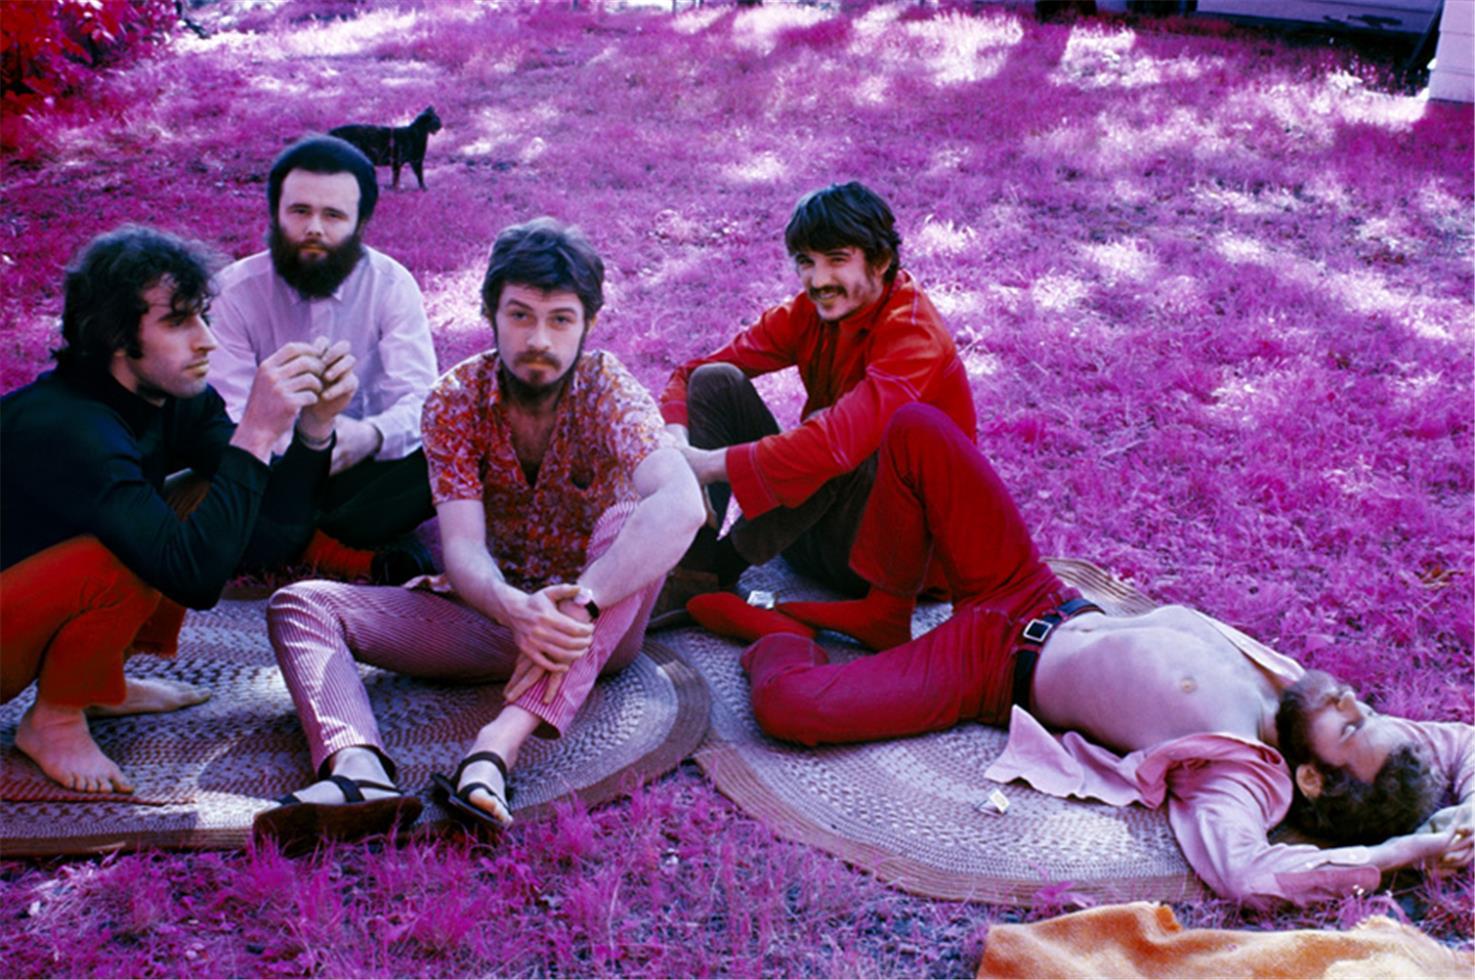 Elliott Landy Color Photograph - The Band, Richard & Garth’s house on infrared film, 1969